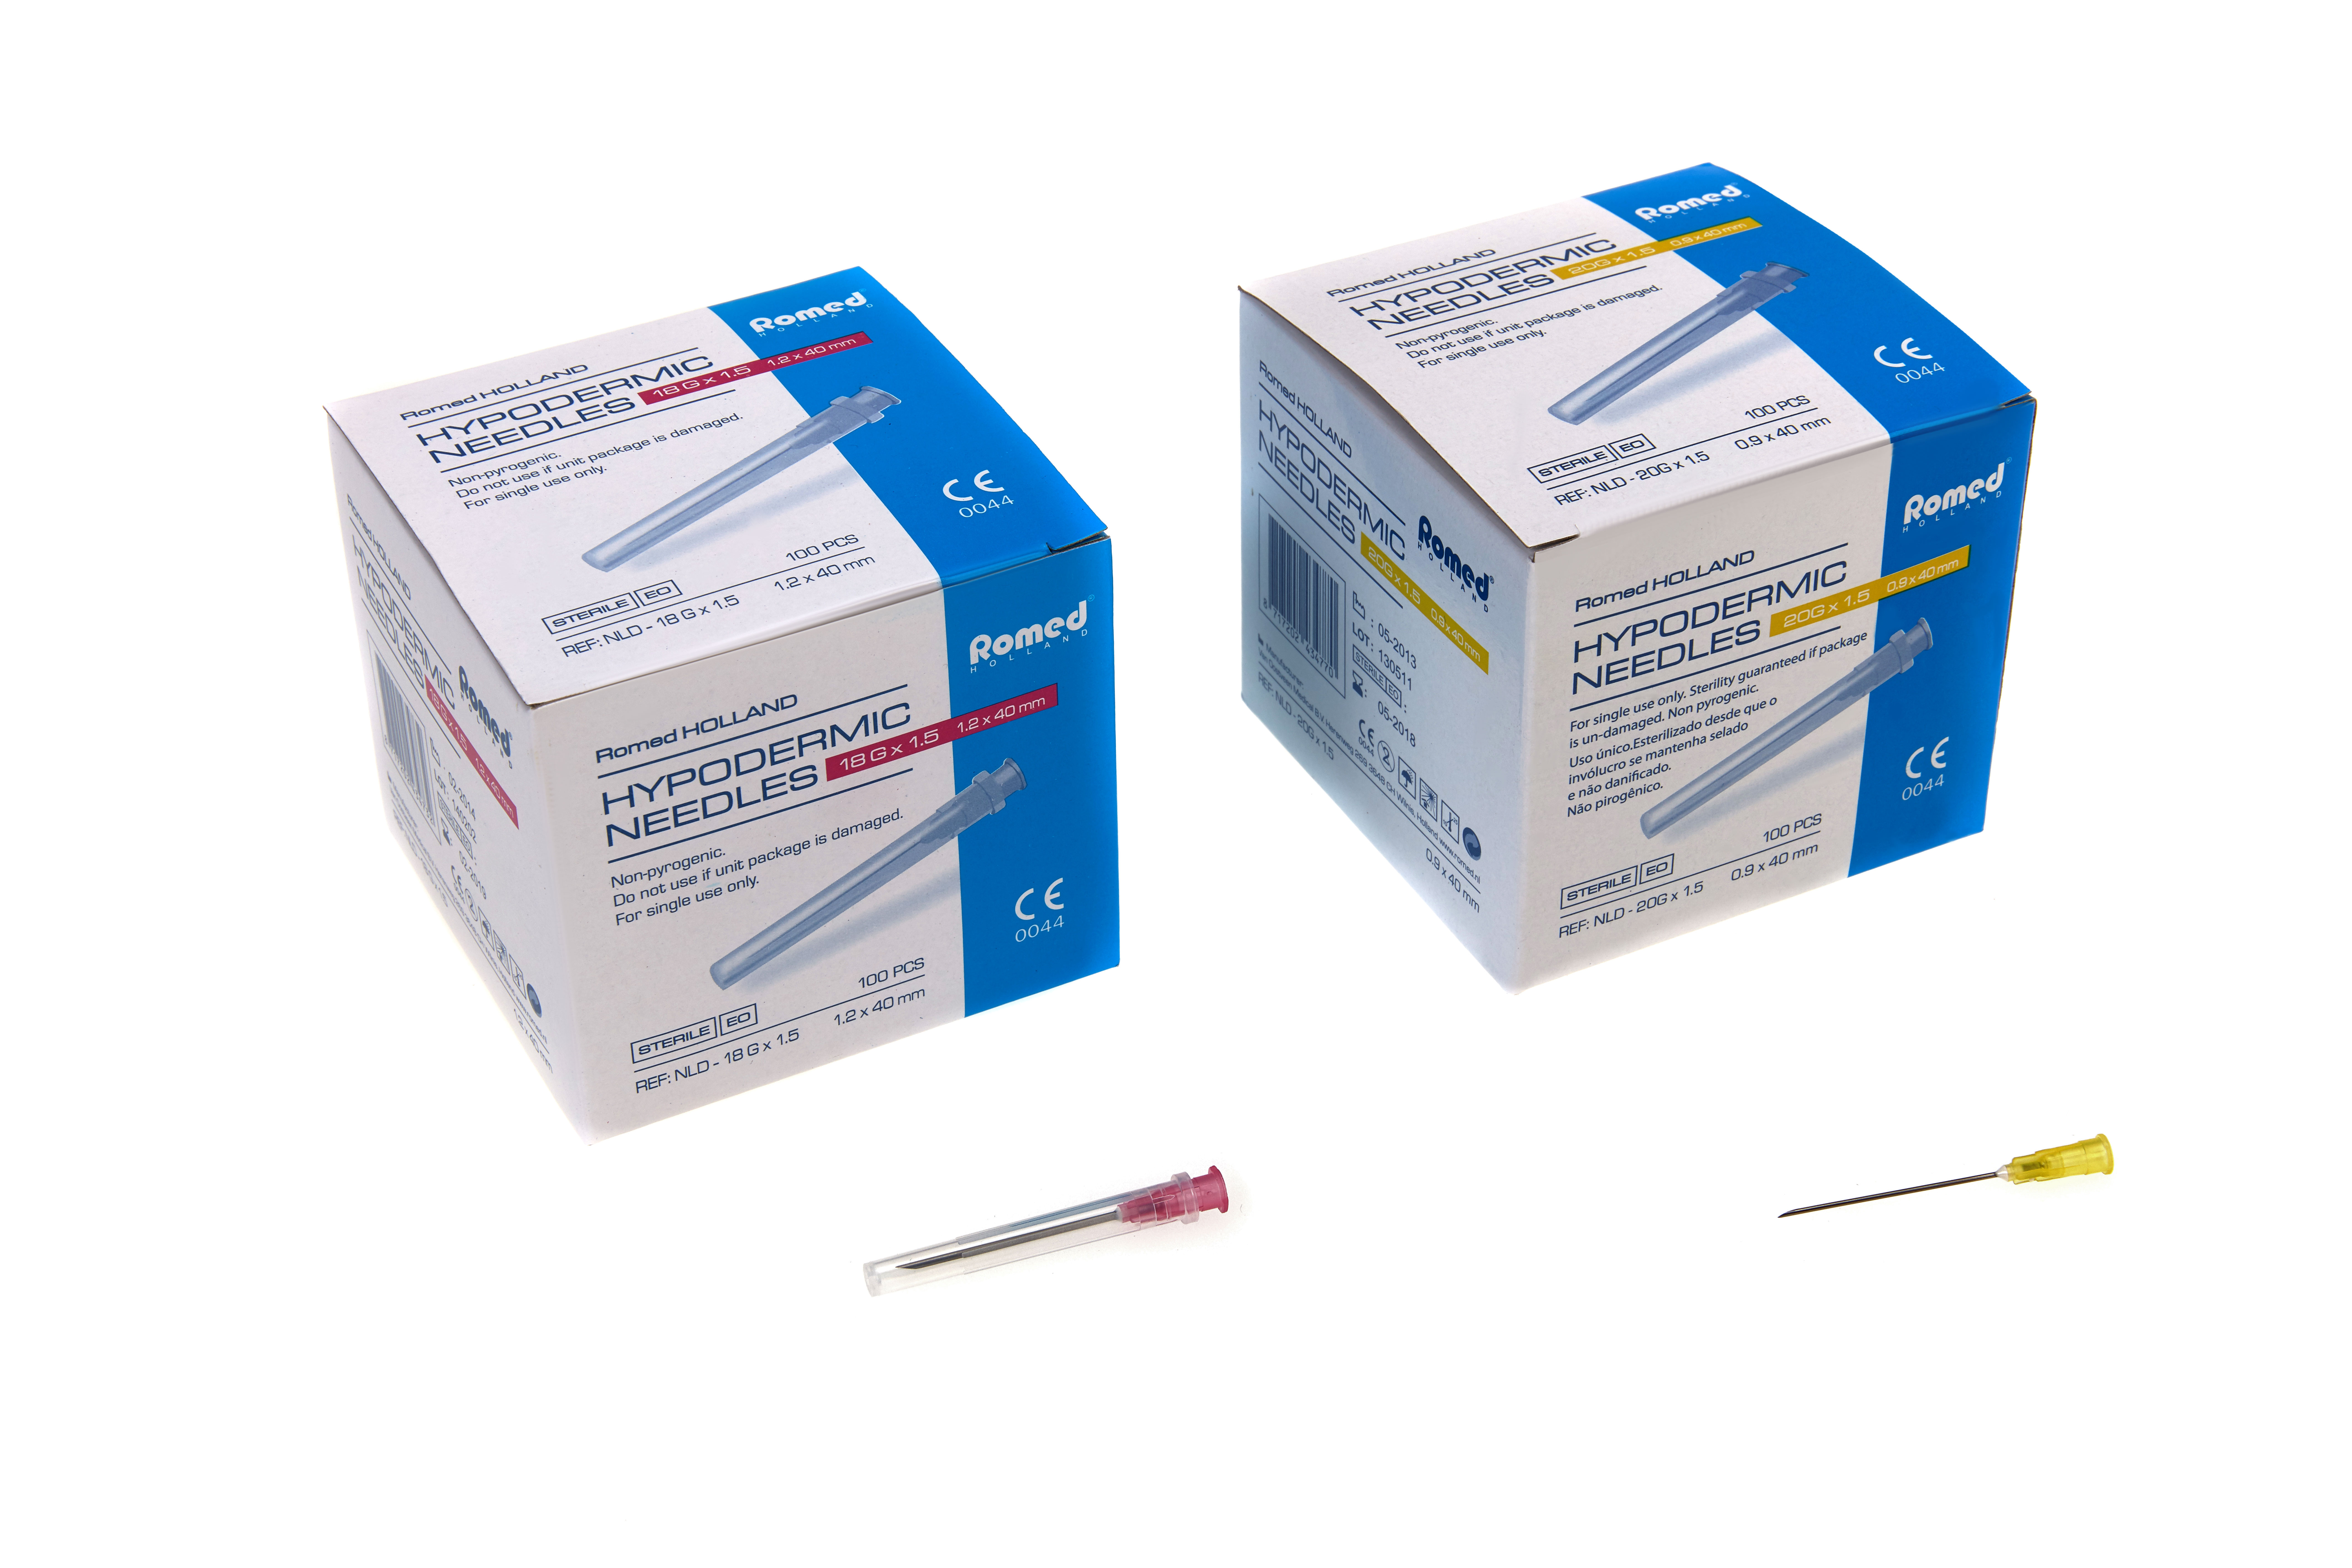 NLD-20GX1.5 Romed hypodermic needles, 20gx1.5", sterile per piece, 100 pcs in an inner box, 50 x 100 pcs = 5.000 pcs in a carton.